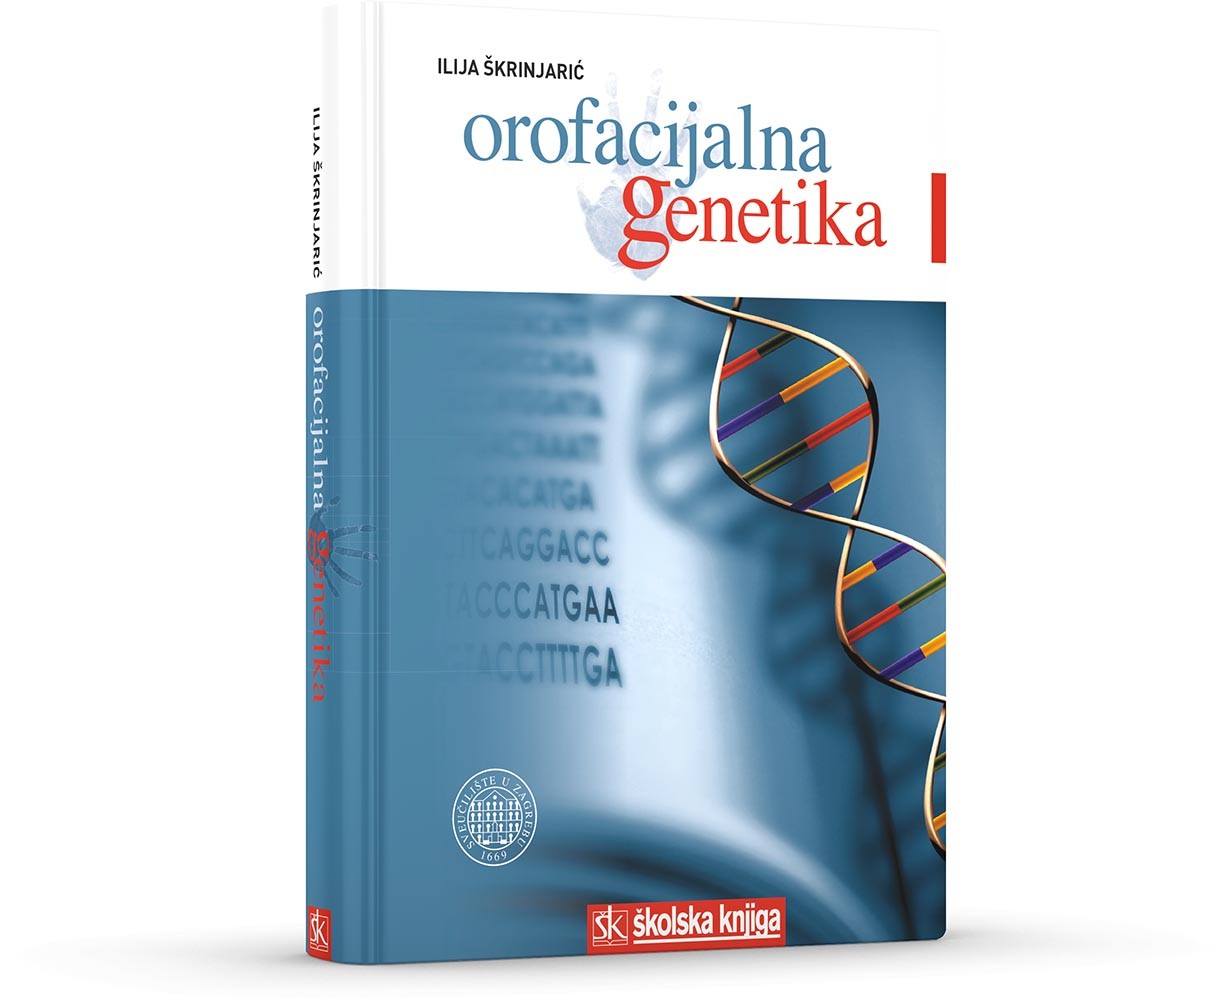 Orofacijalna genetika